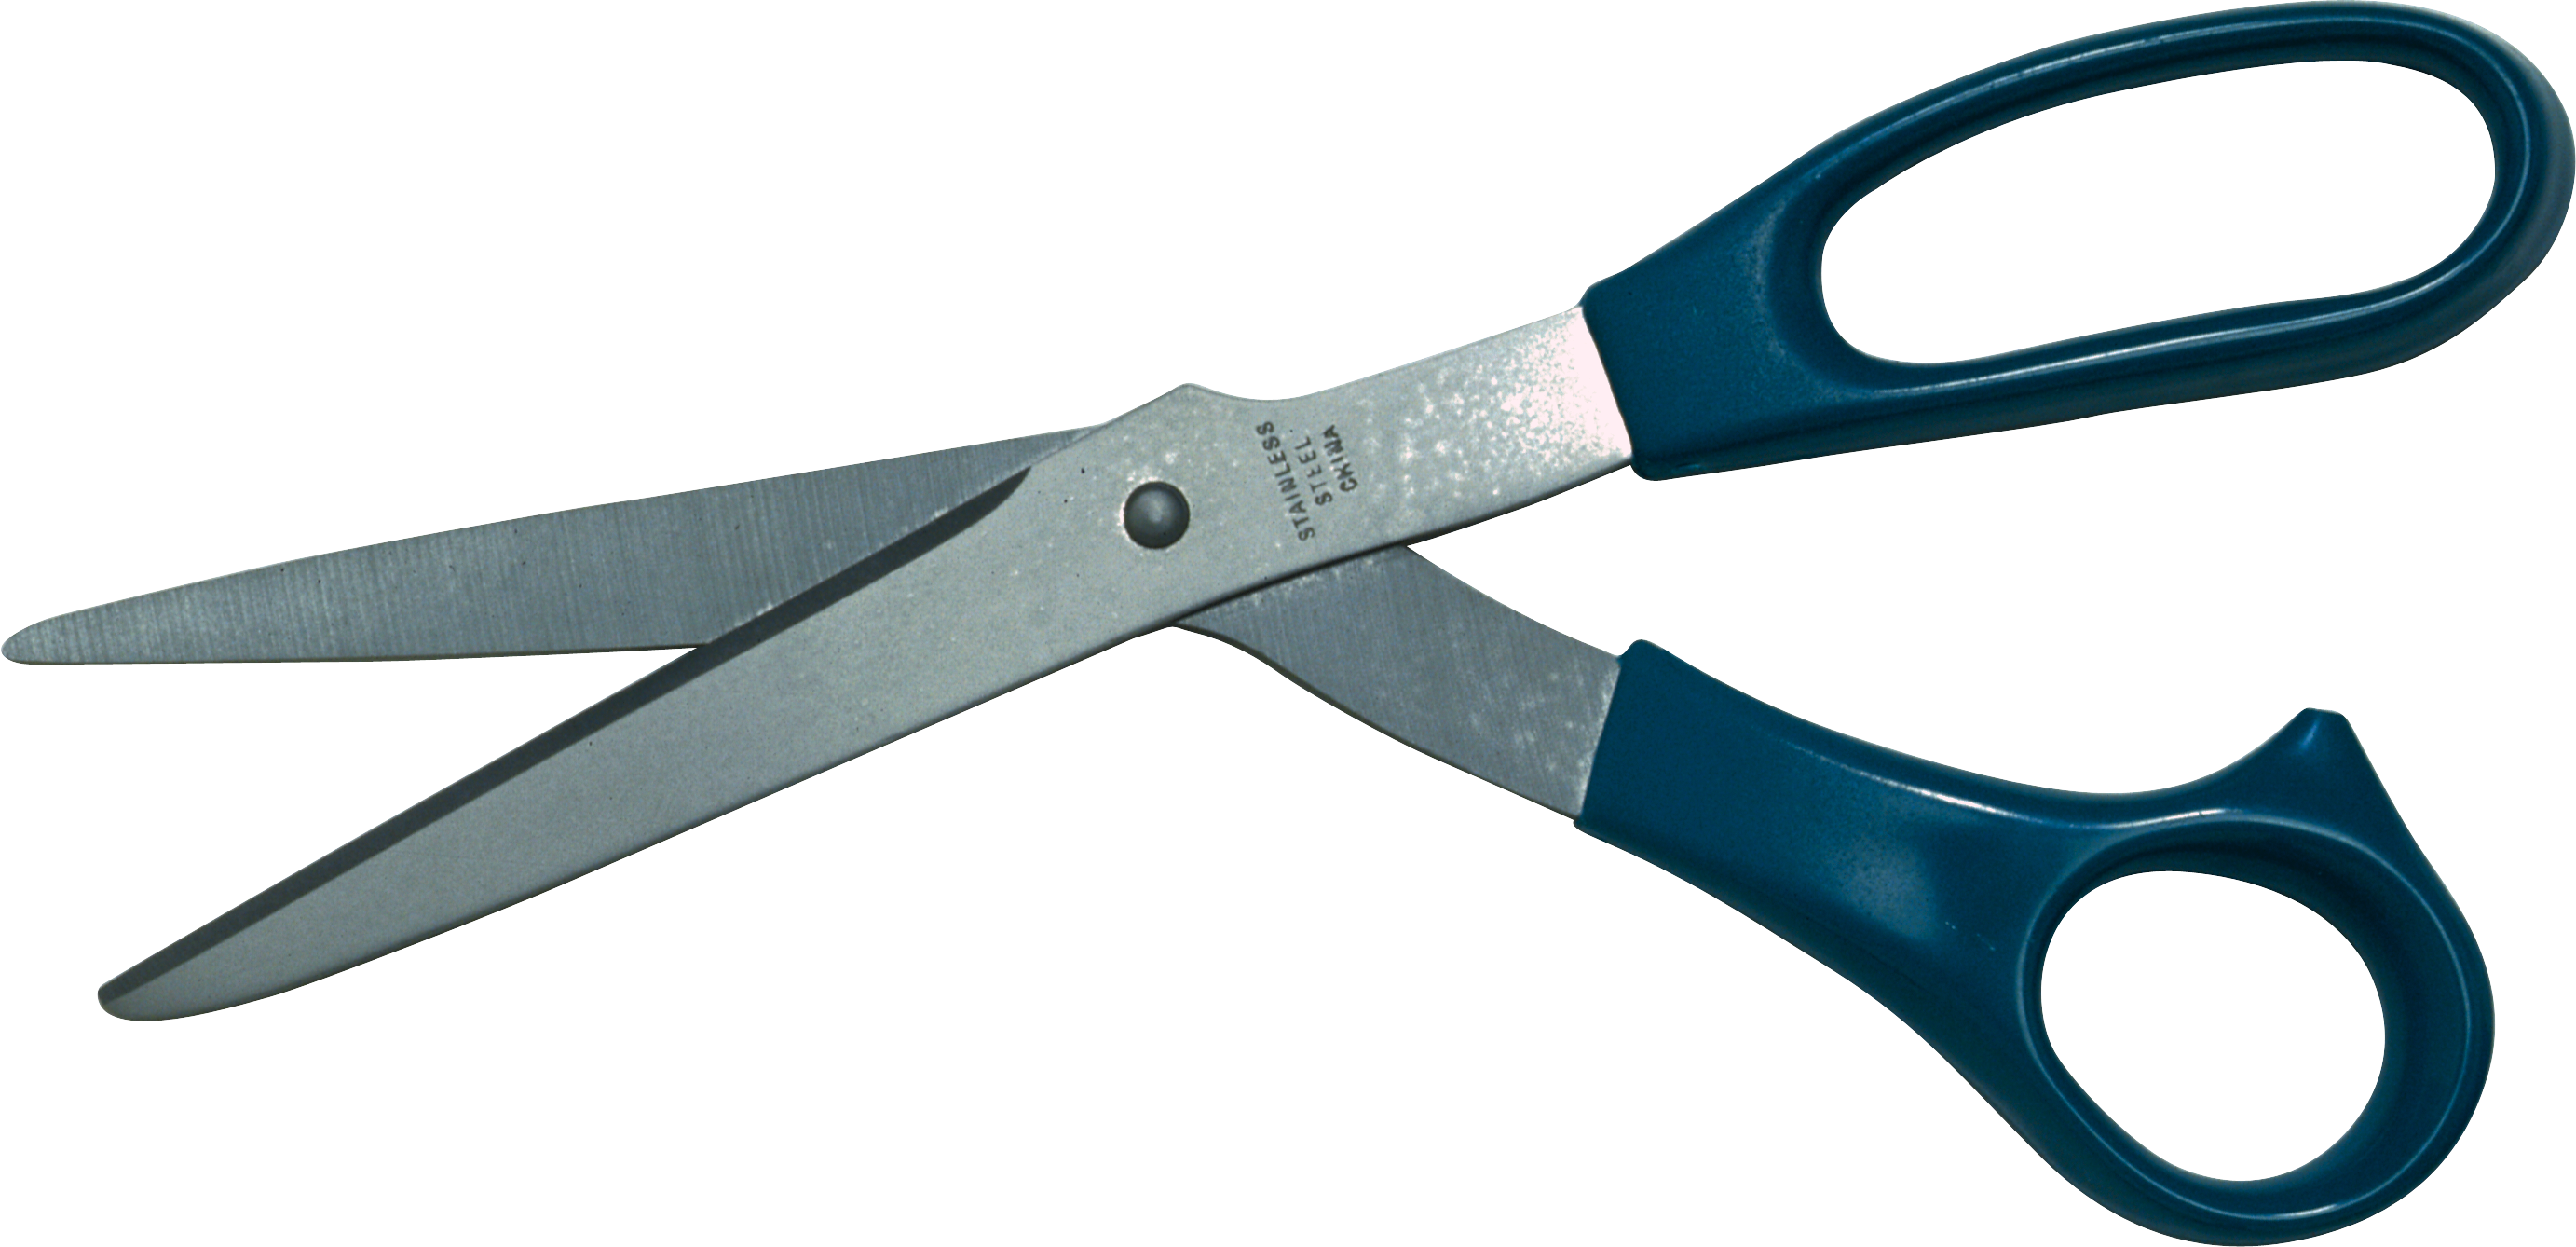 Scissors PNG - 16961